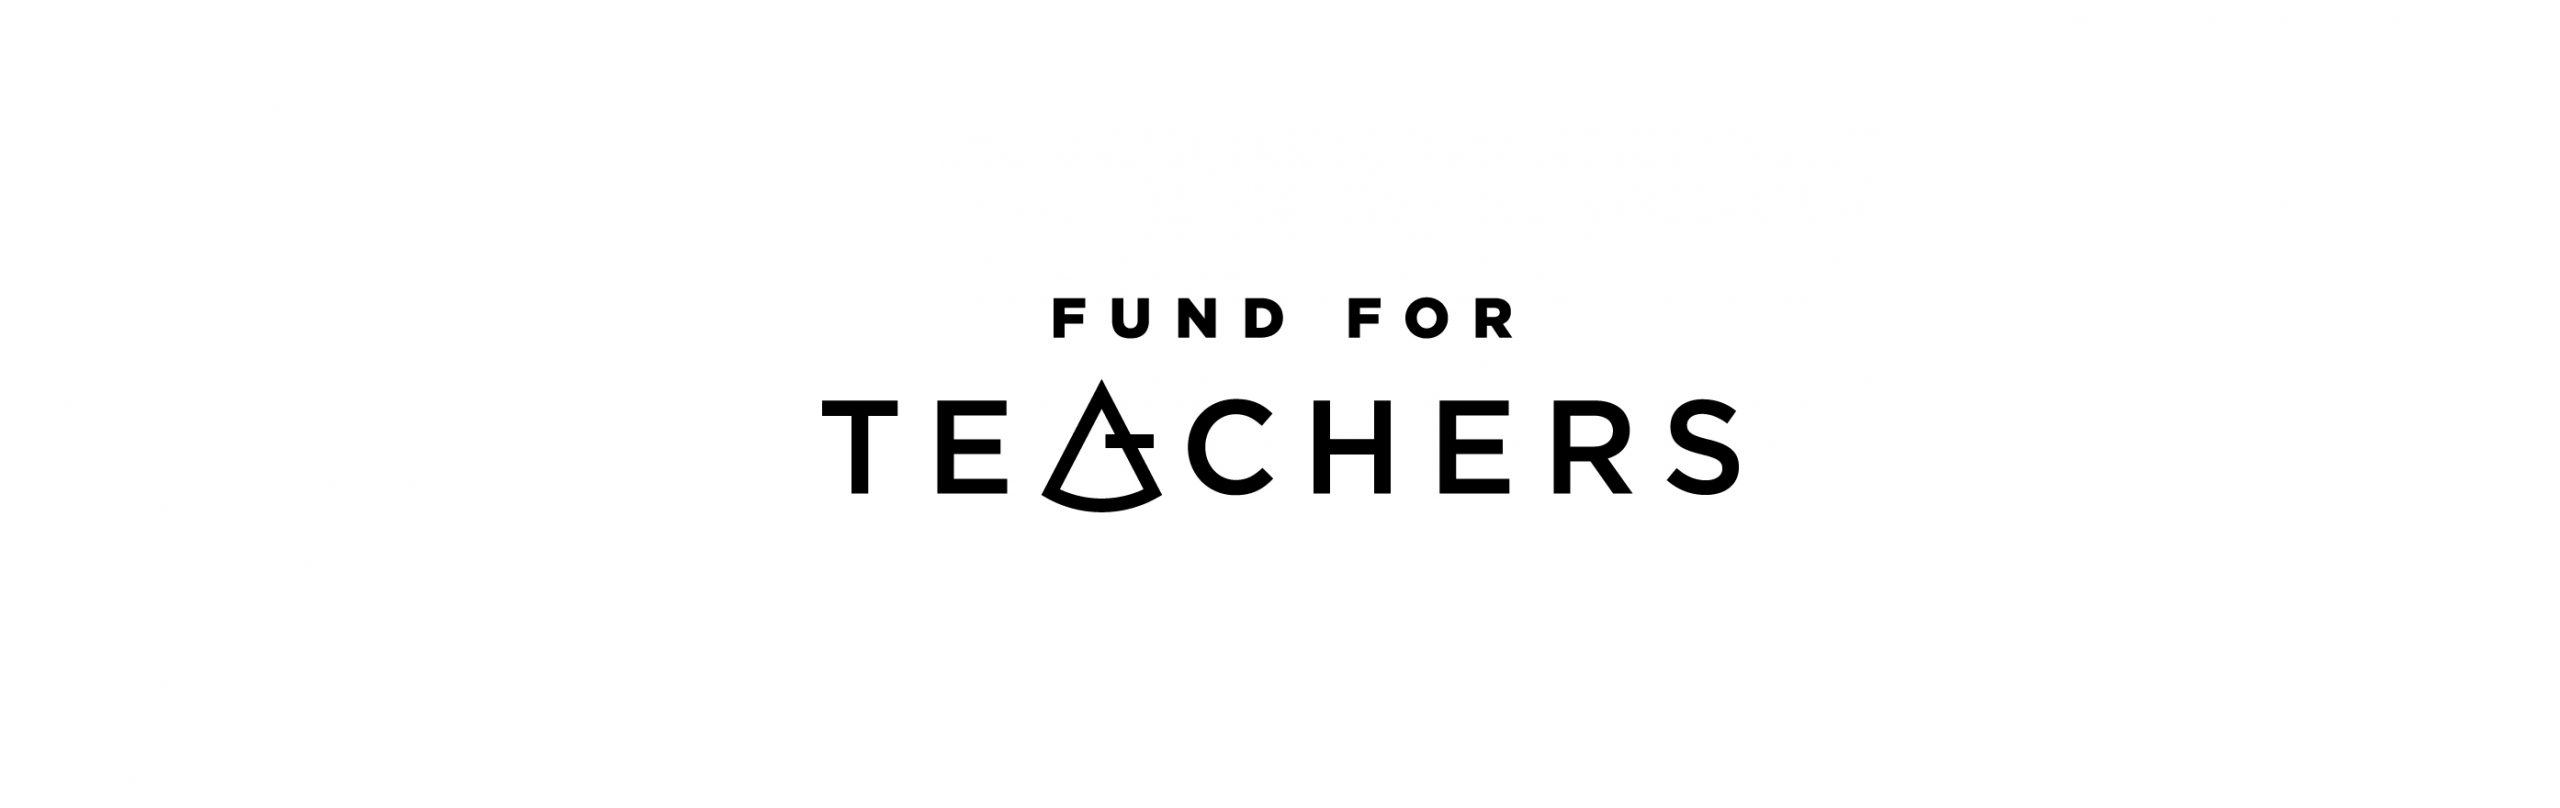 Fund for Teachers Fellowships Open for Oklahoma Teachers